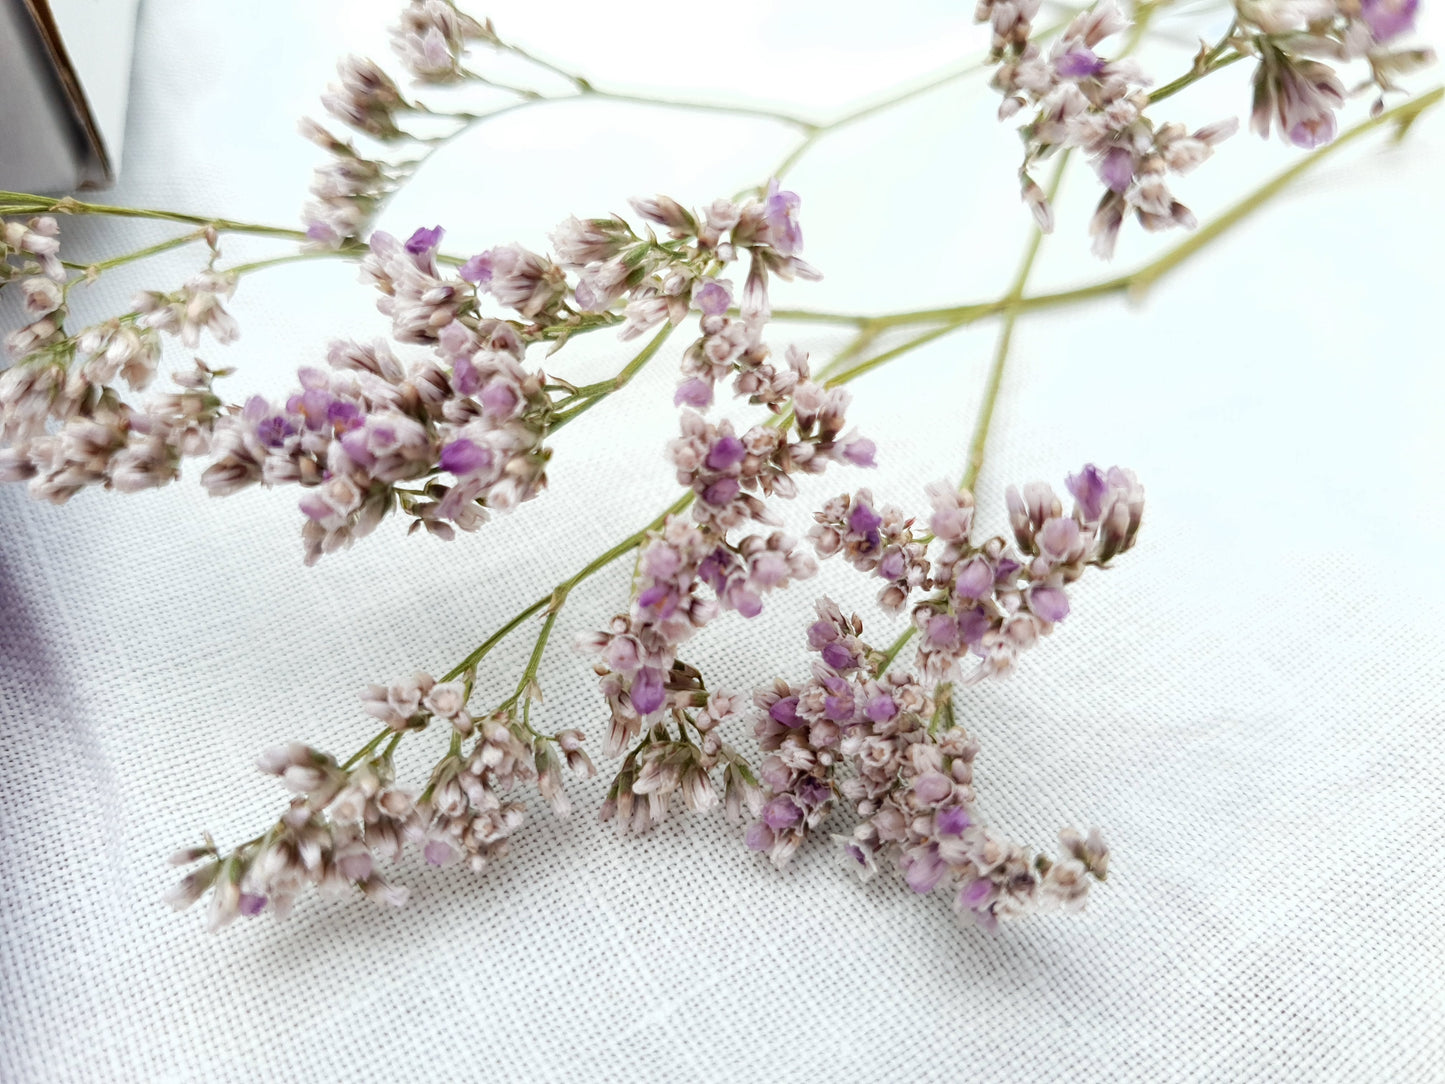 Dried Limonium Sprigs in Lilac, aka Sea Lavender